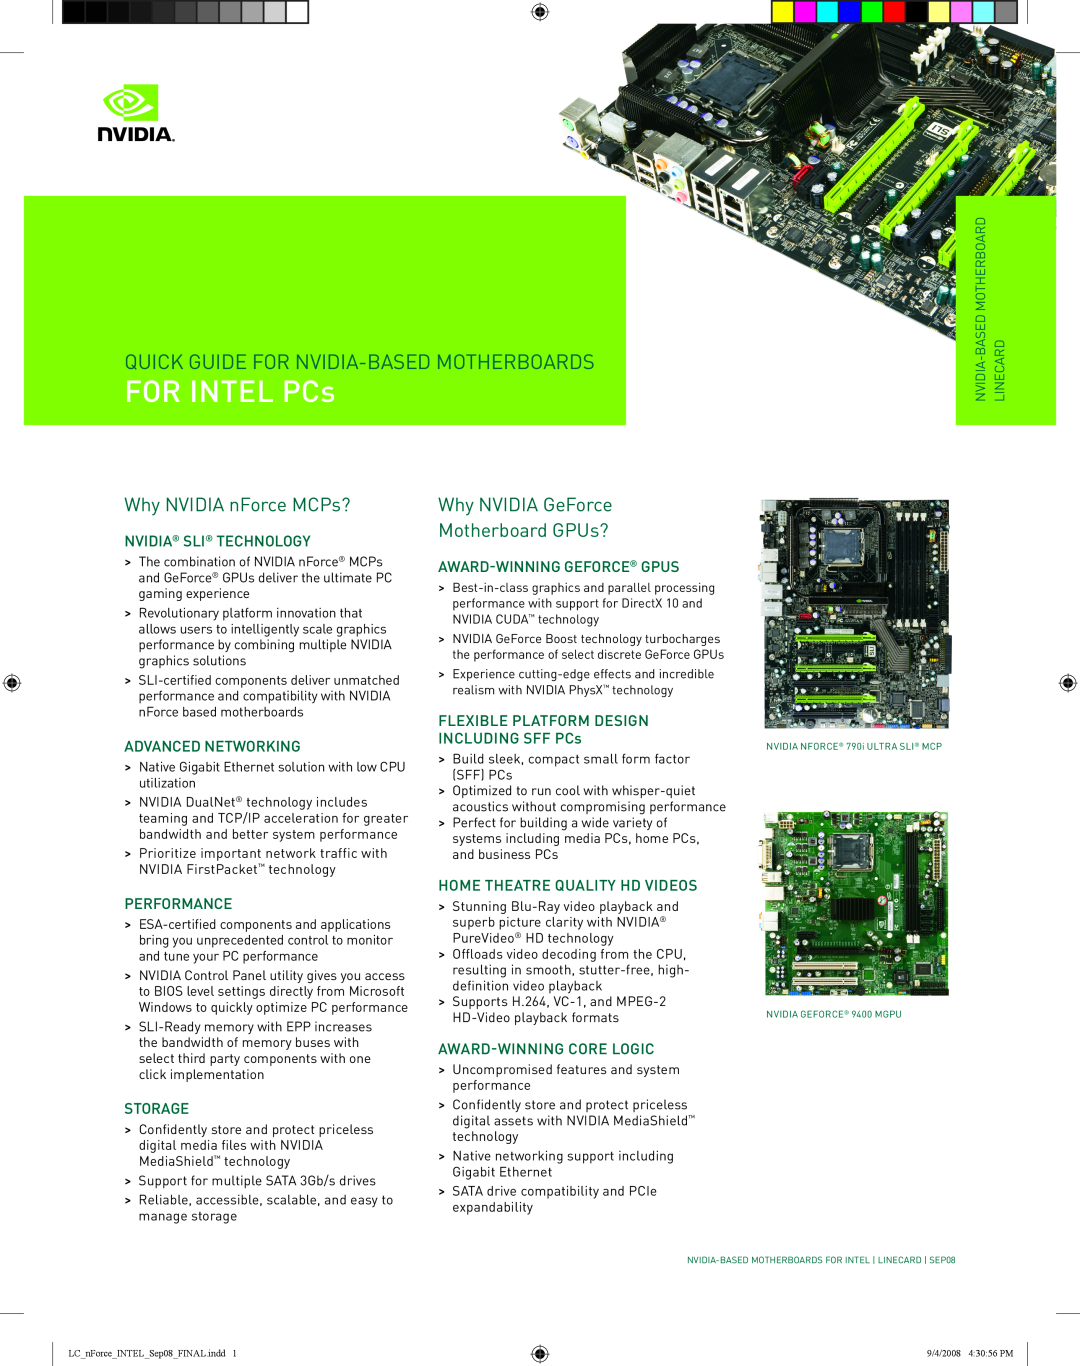 Nvidia LGA775 manual Why NVIDIA nForce MCPs?, Why NVIDIA GeForce Motherboard GPUs?, for iNteL Pcs, NVidiA sLi techNoLoGY 